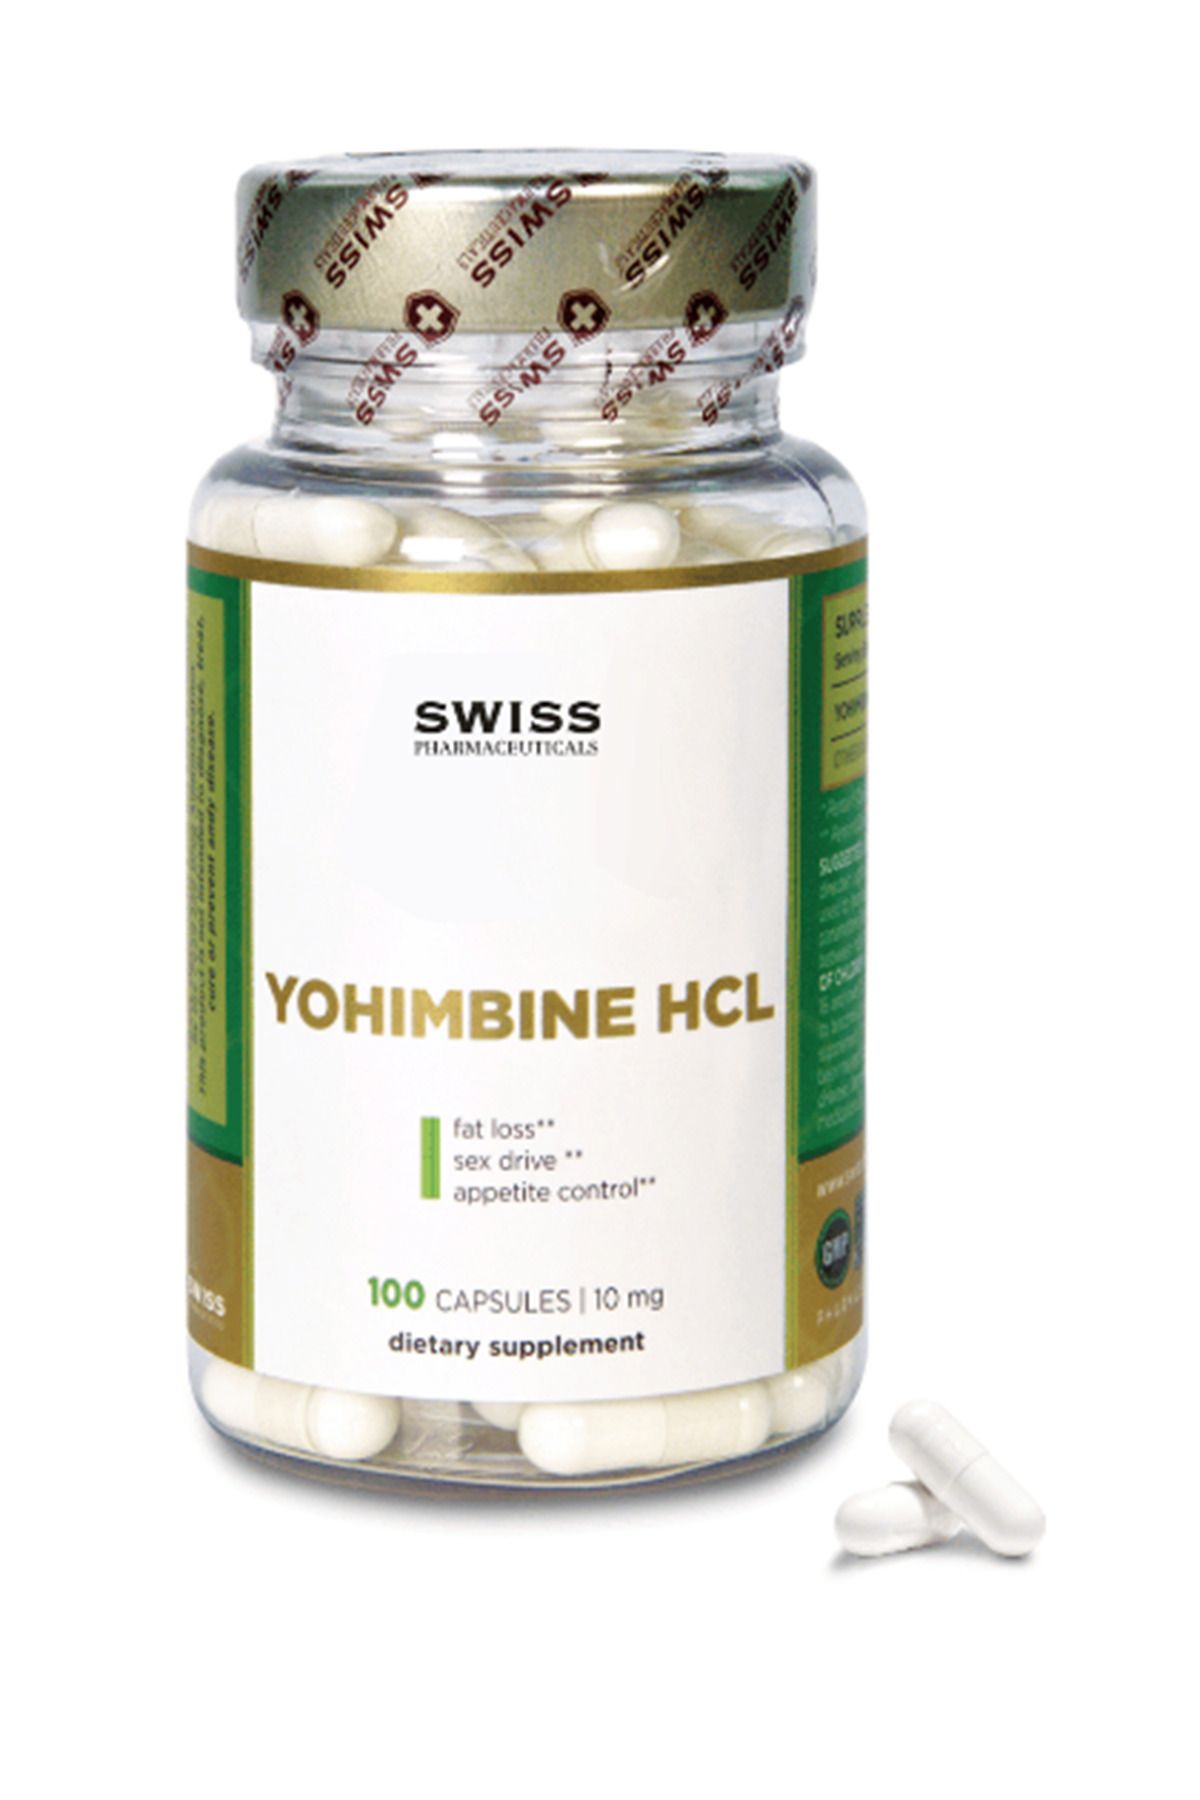 swiss pharma Swiss Pharmaceuticals YOHIMBINE HCL 10mg 100 Capsul.Orj Swiss Made 3737